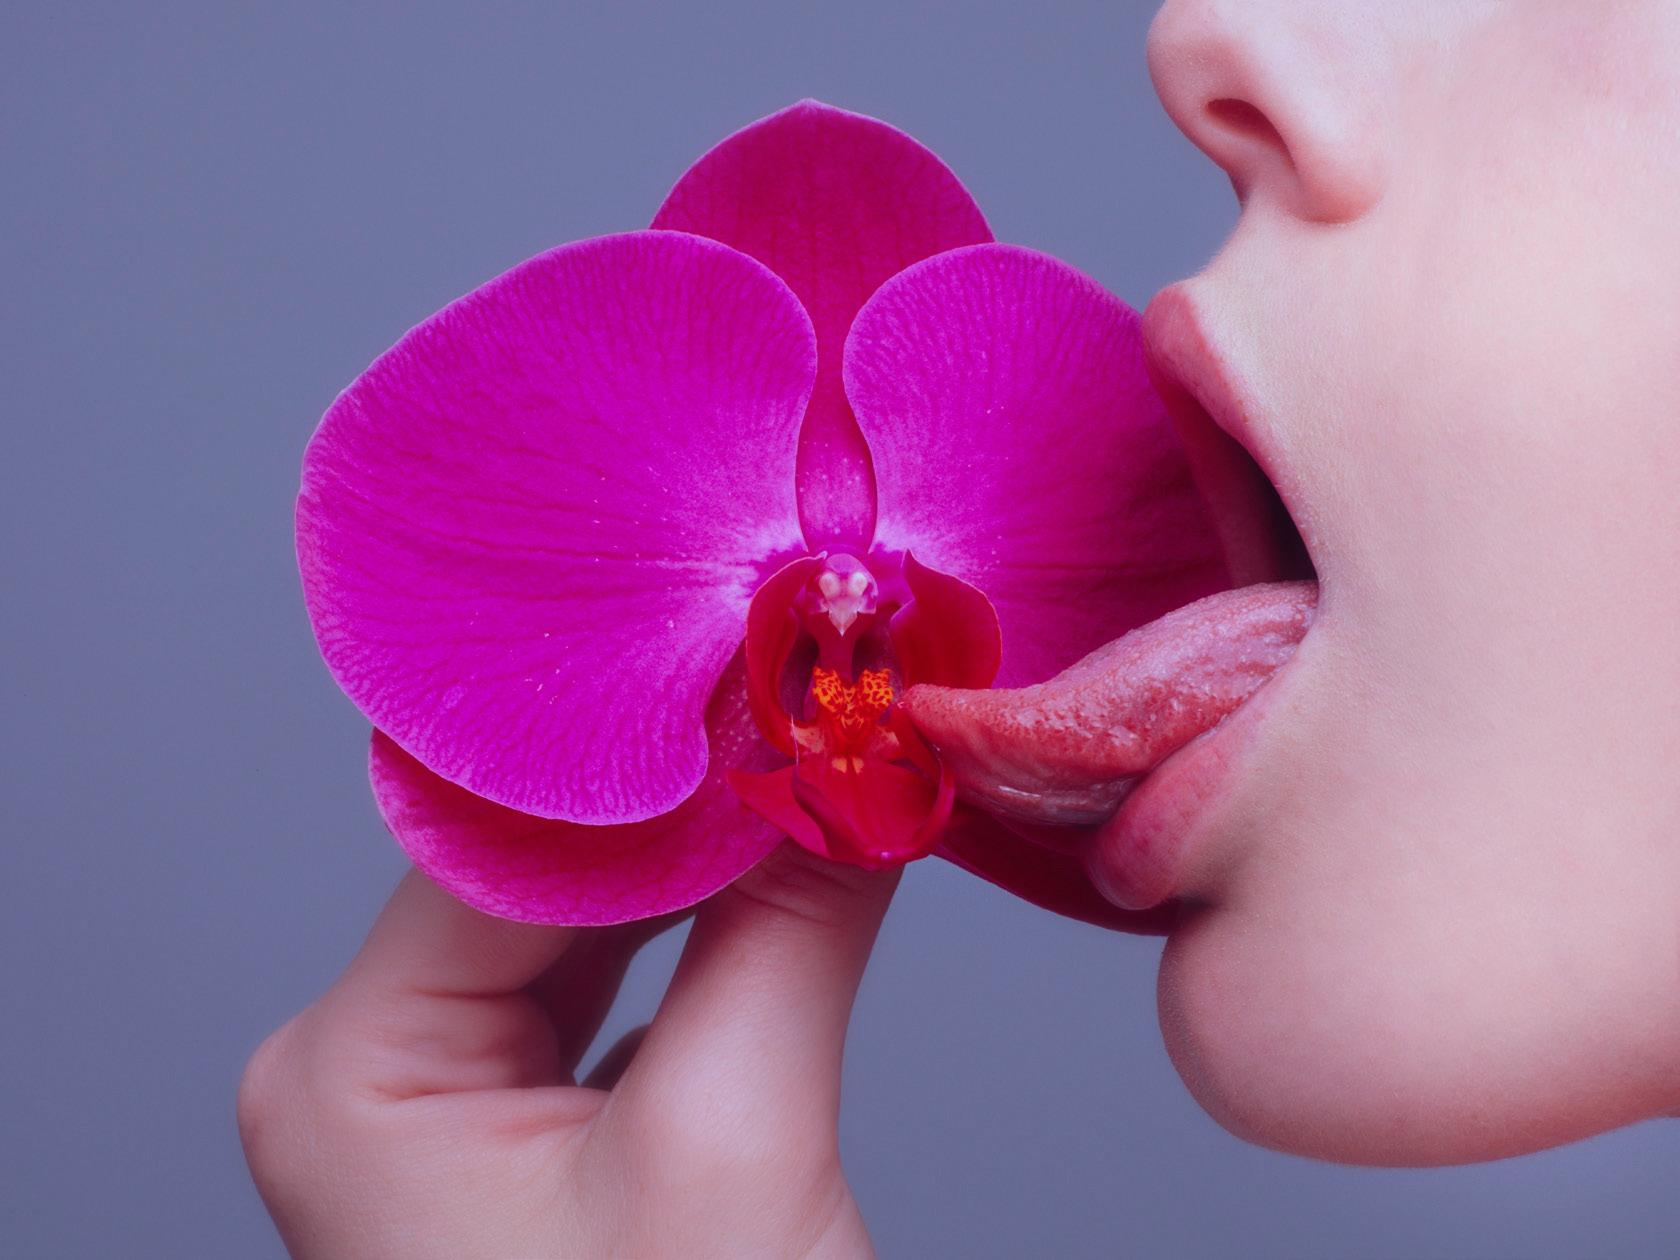 Tyler Shields - Orchidee, Fotografie 2019, gedruckt nach